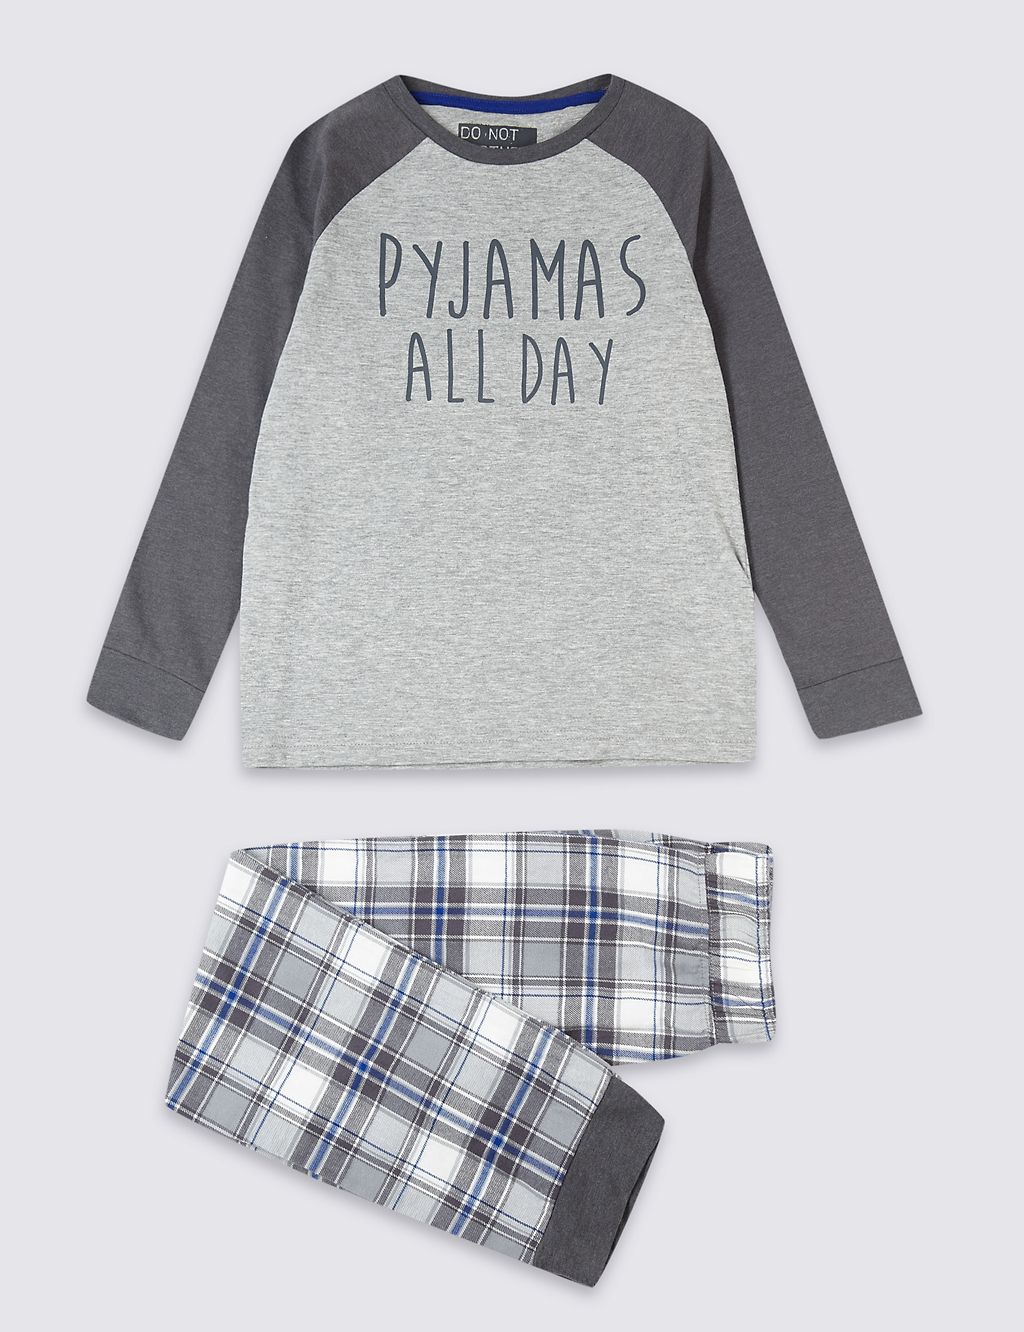 All Day Pyjamas (3-16 Years) 1 of 4